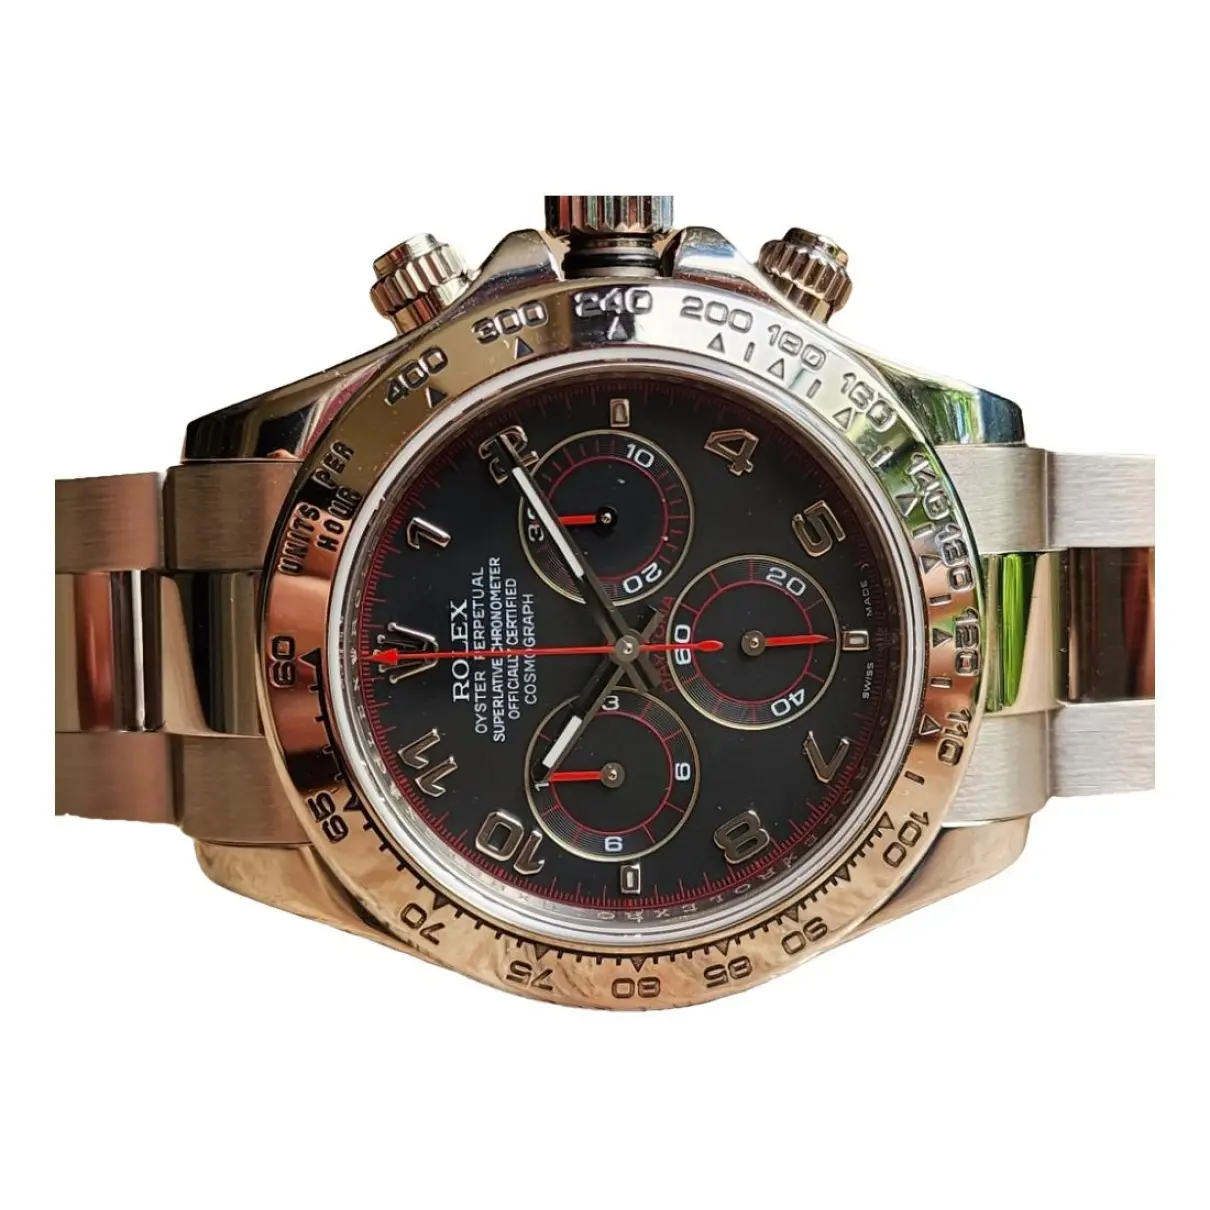 Daytona white gold watch Rolex